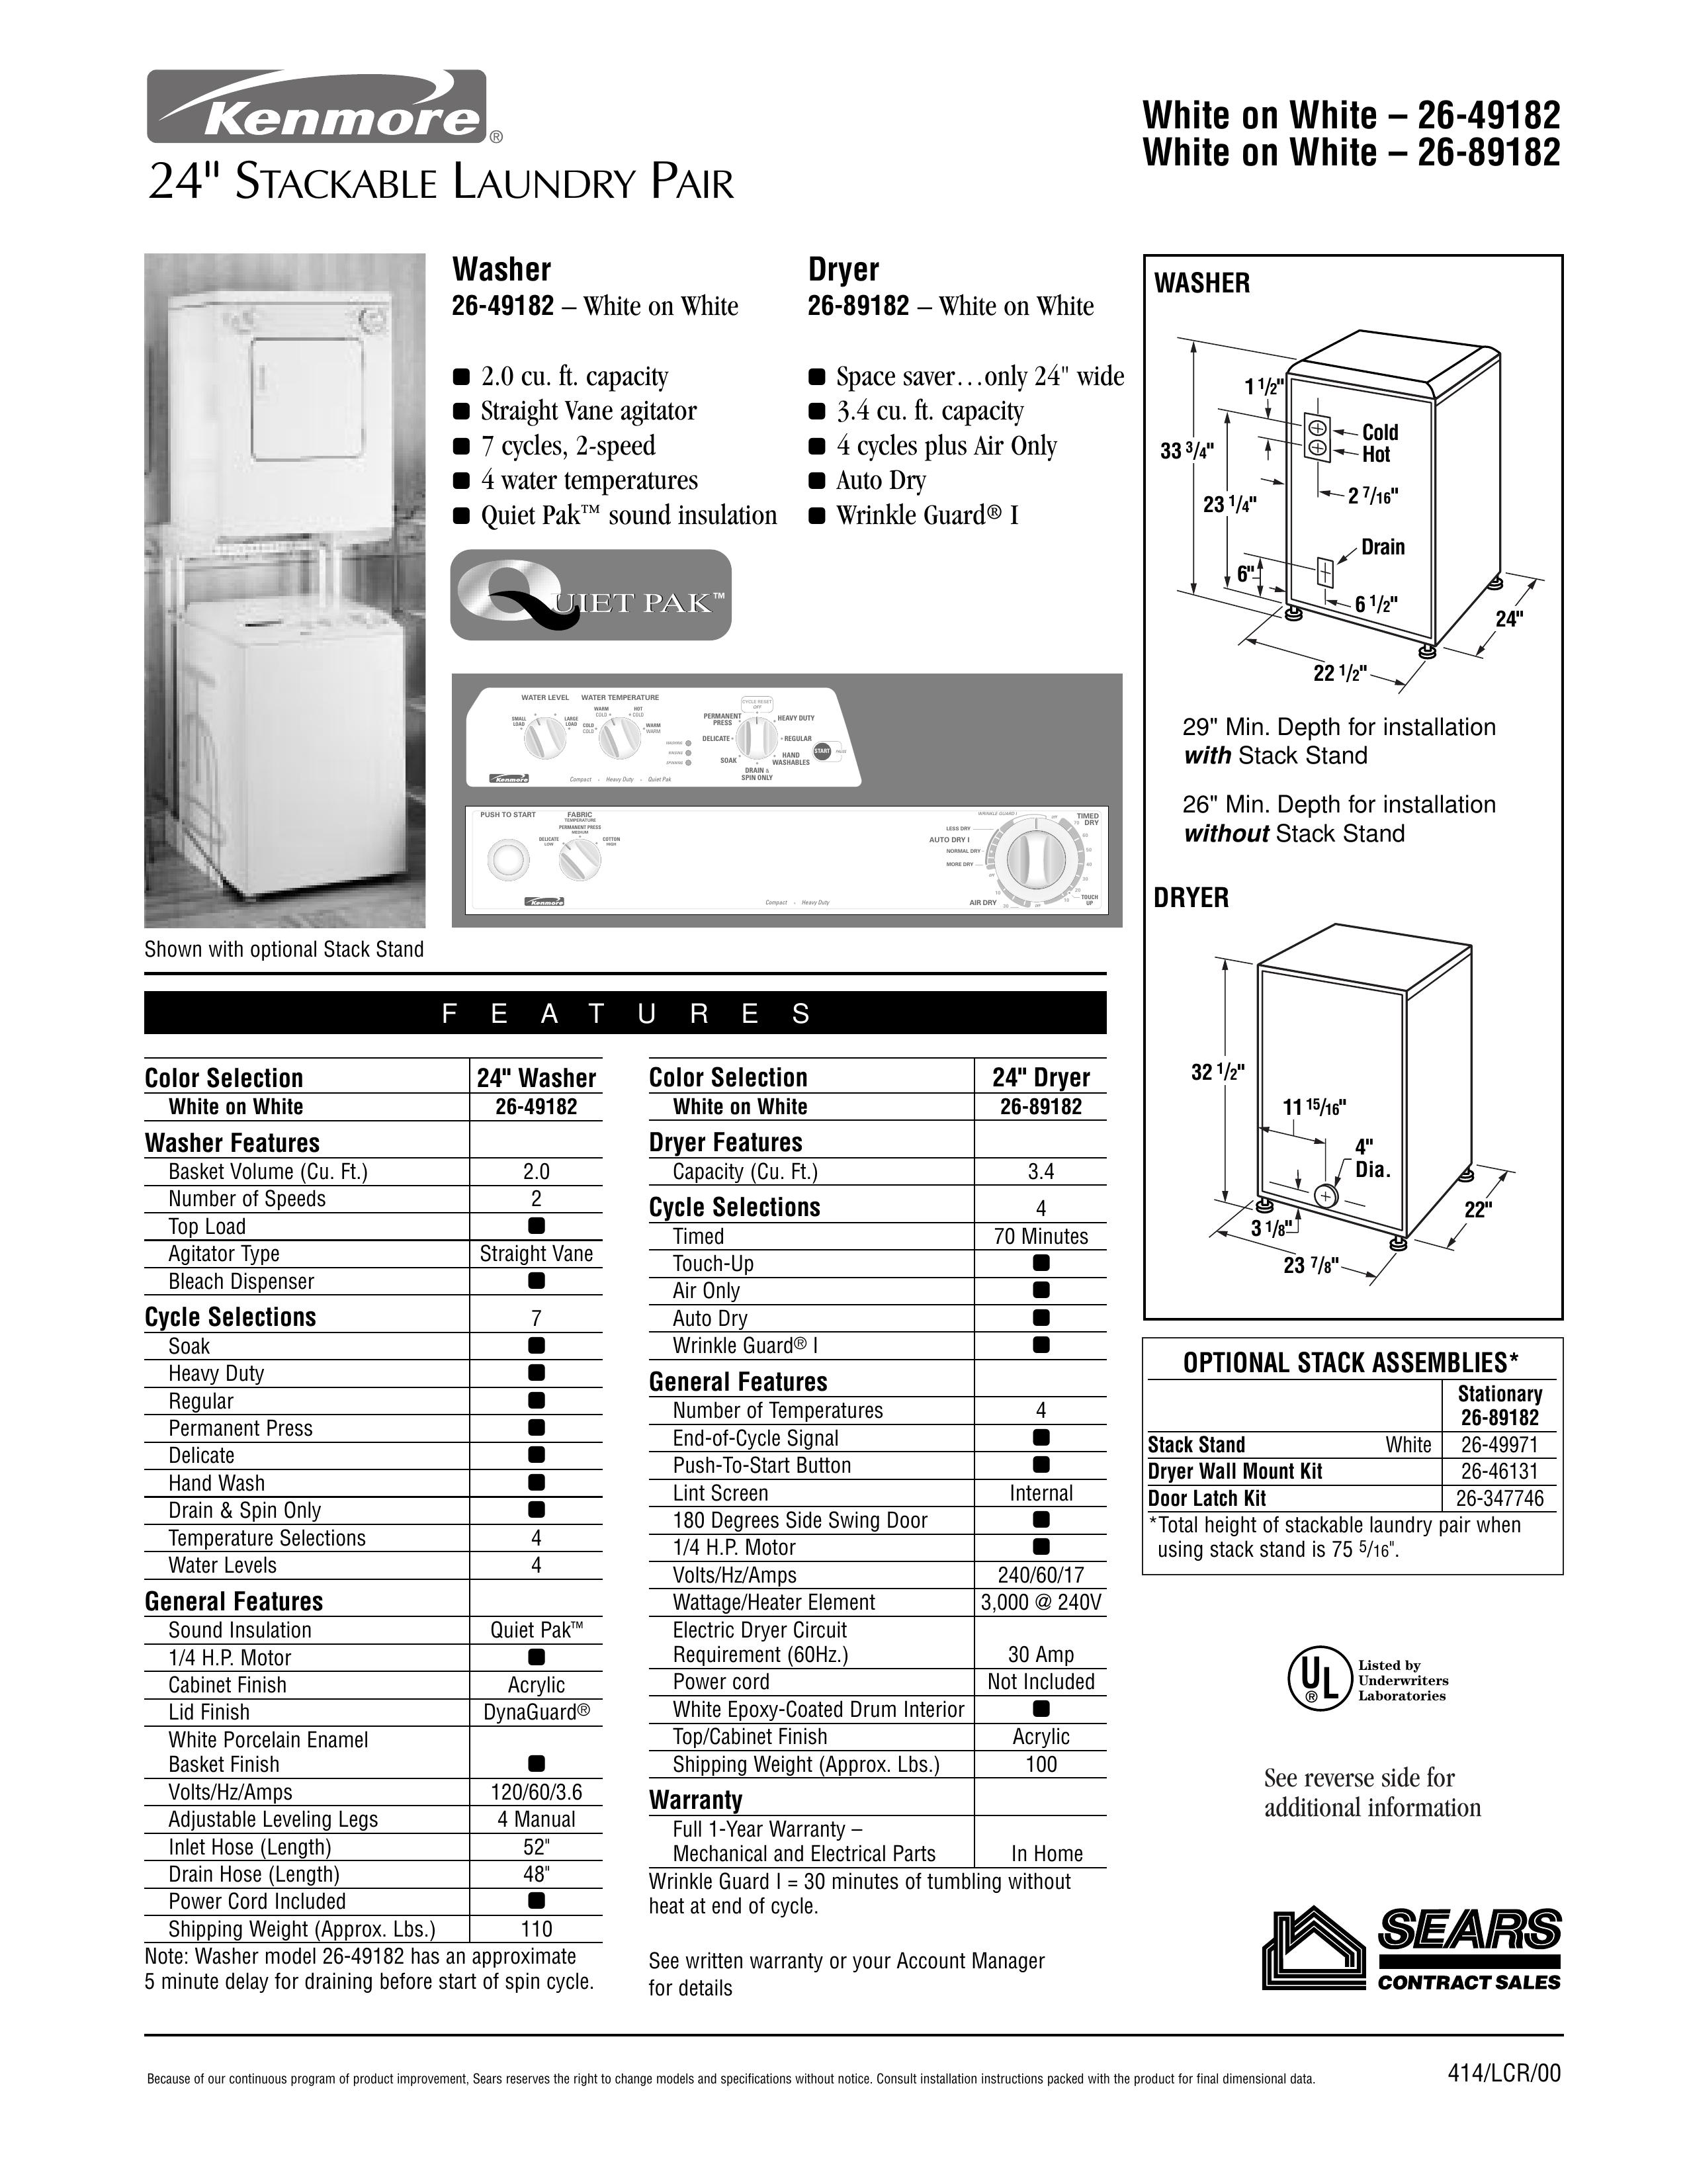 Kenmore 26-89182 Washer/Dryer User Manual